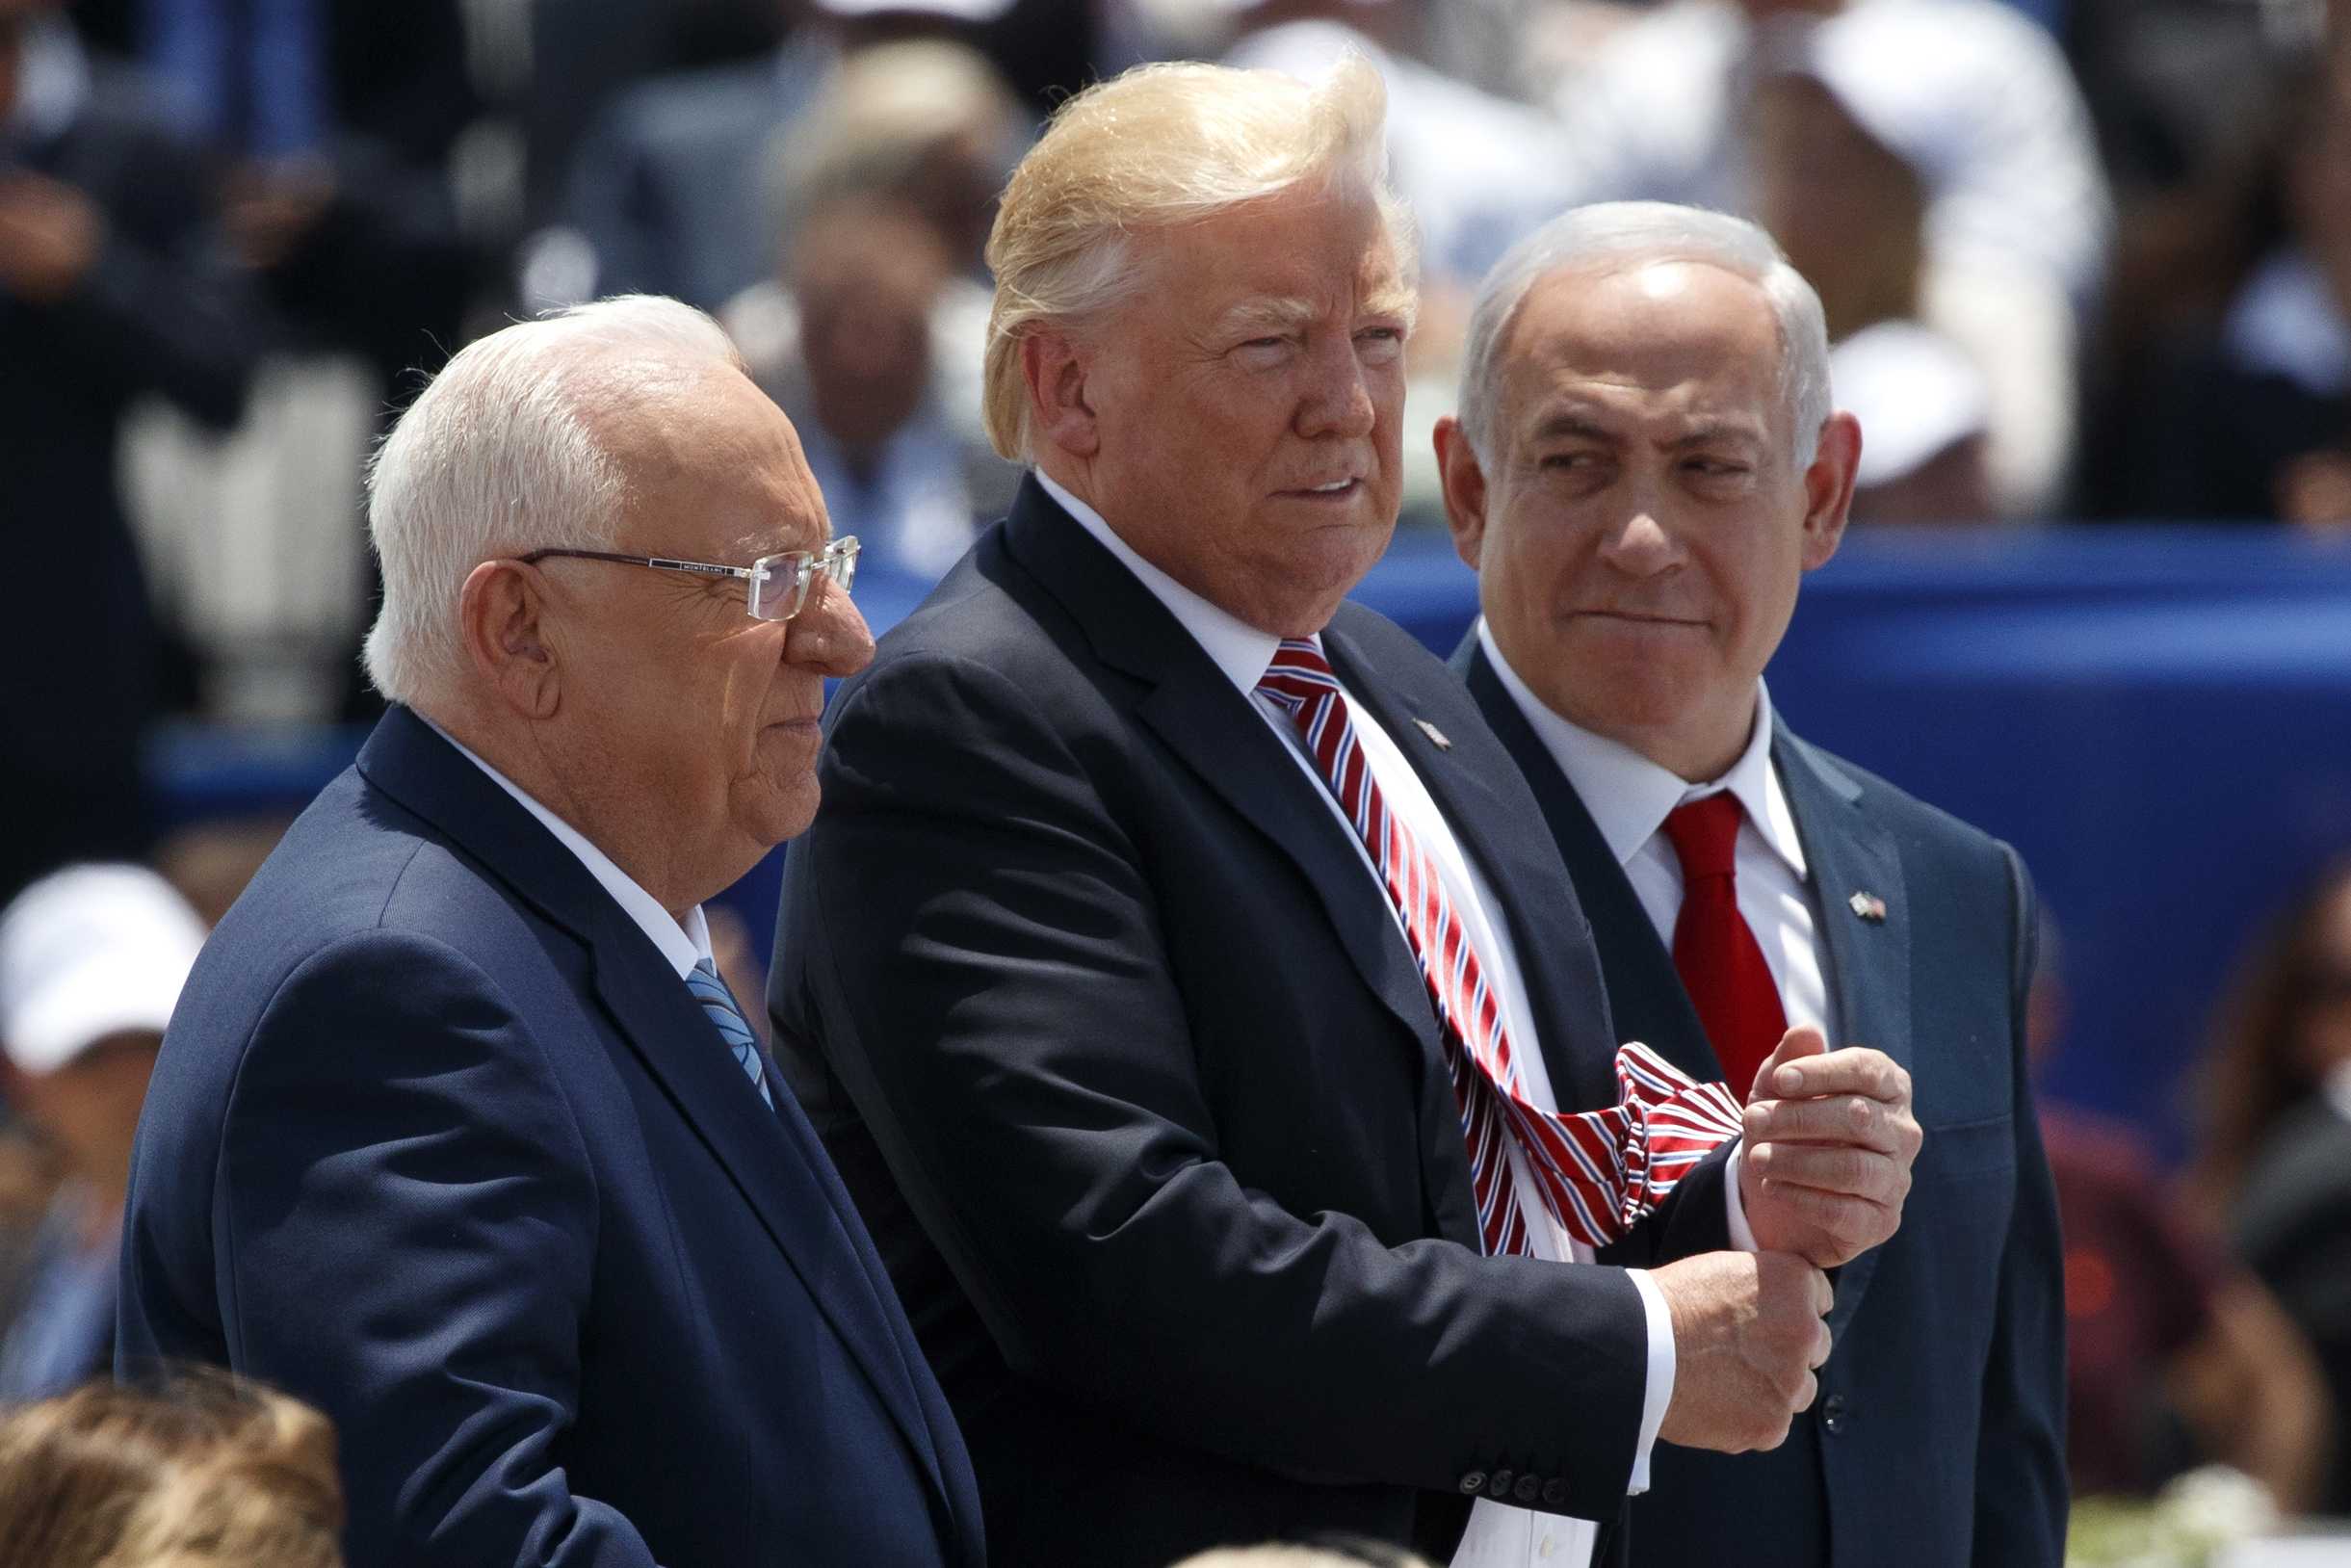 WATCH LIVE: President Trump visits Jerusalem's Western Wall